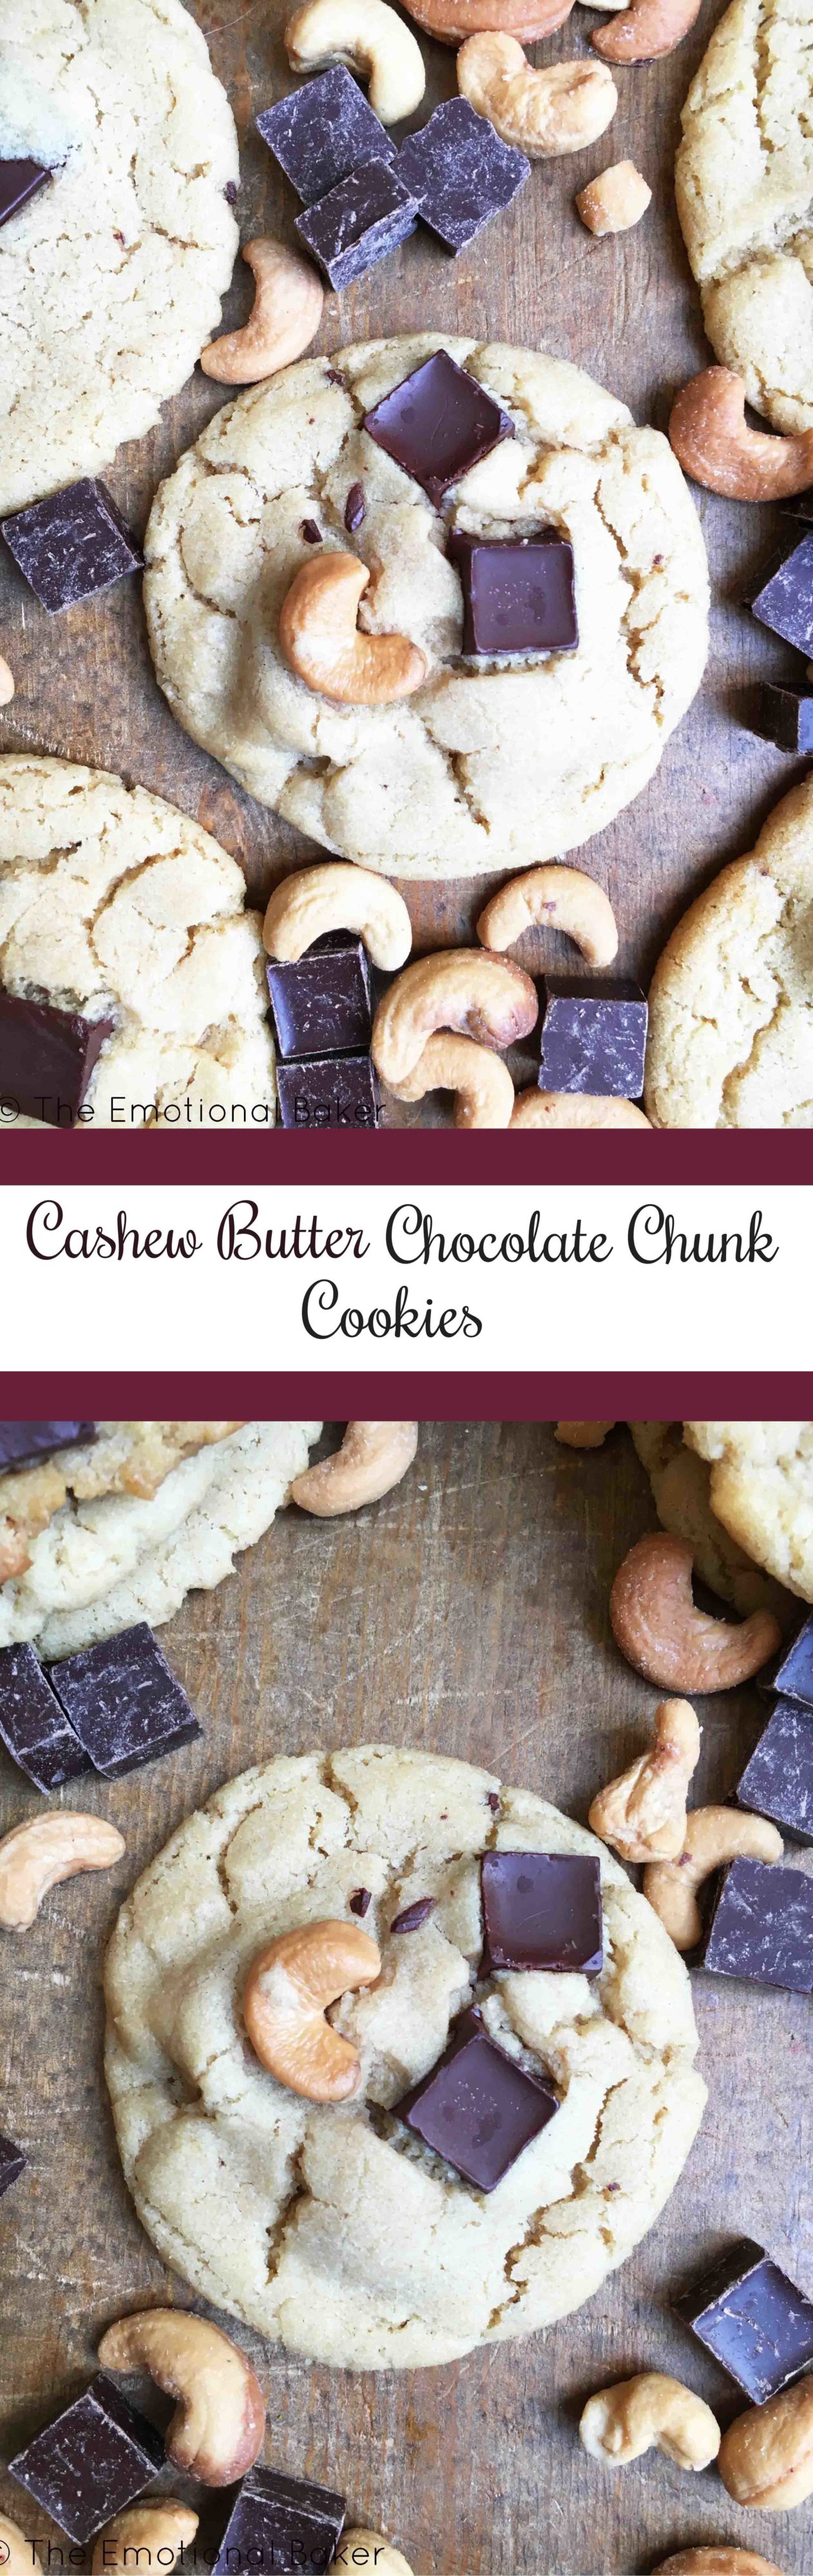 Cashew Butter Chocolate Chunk Cookies